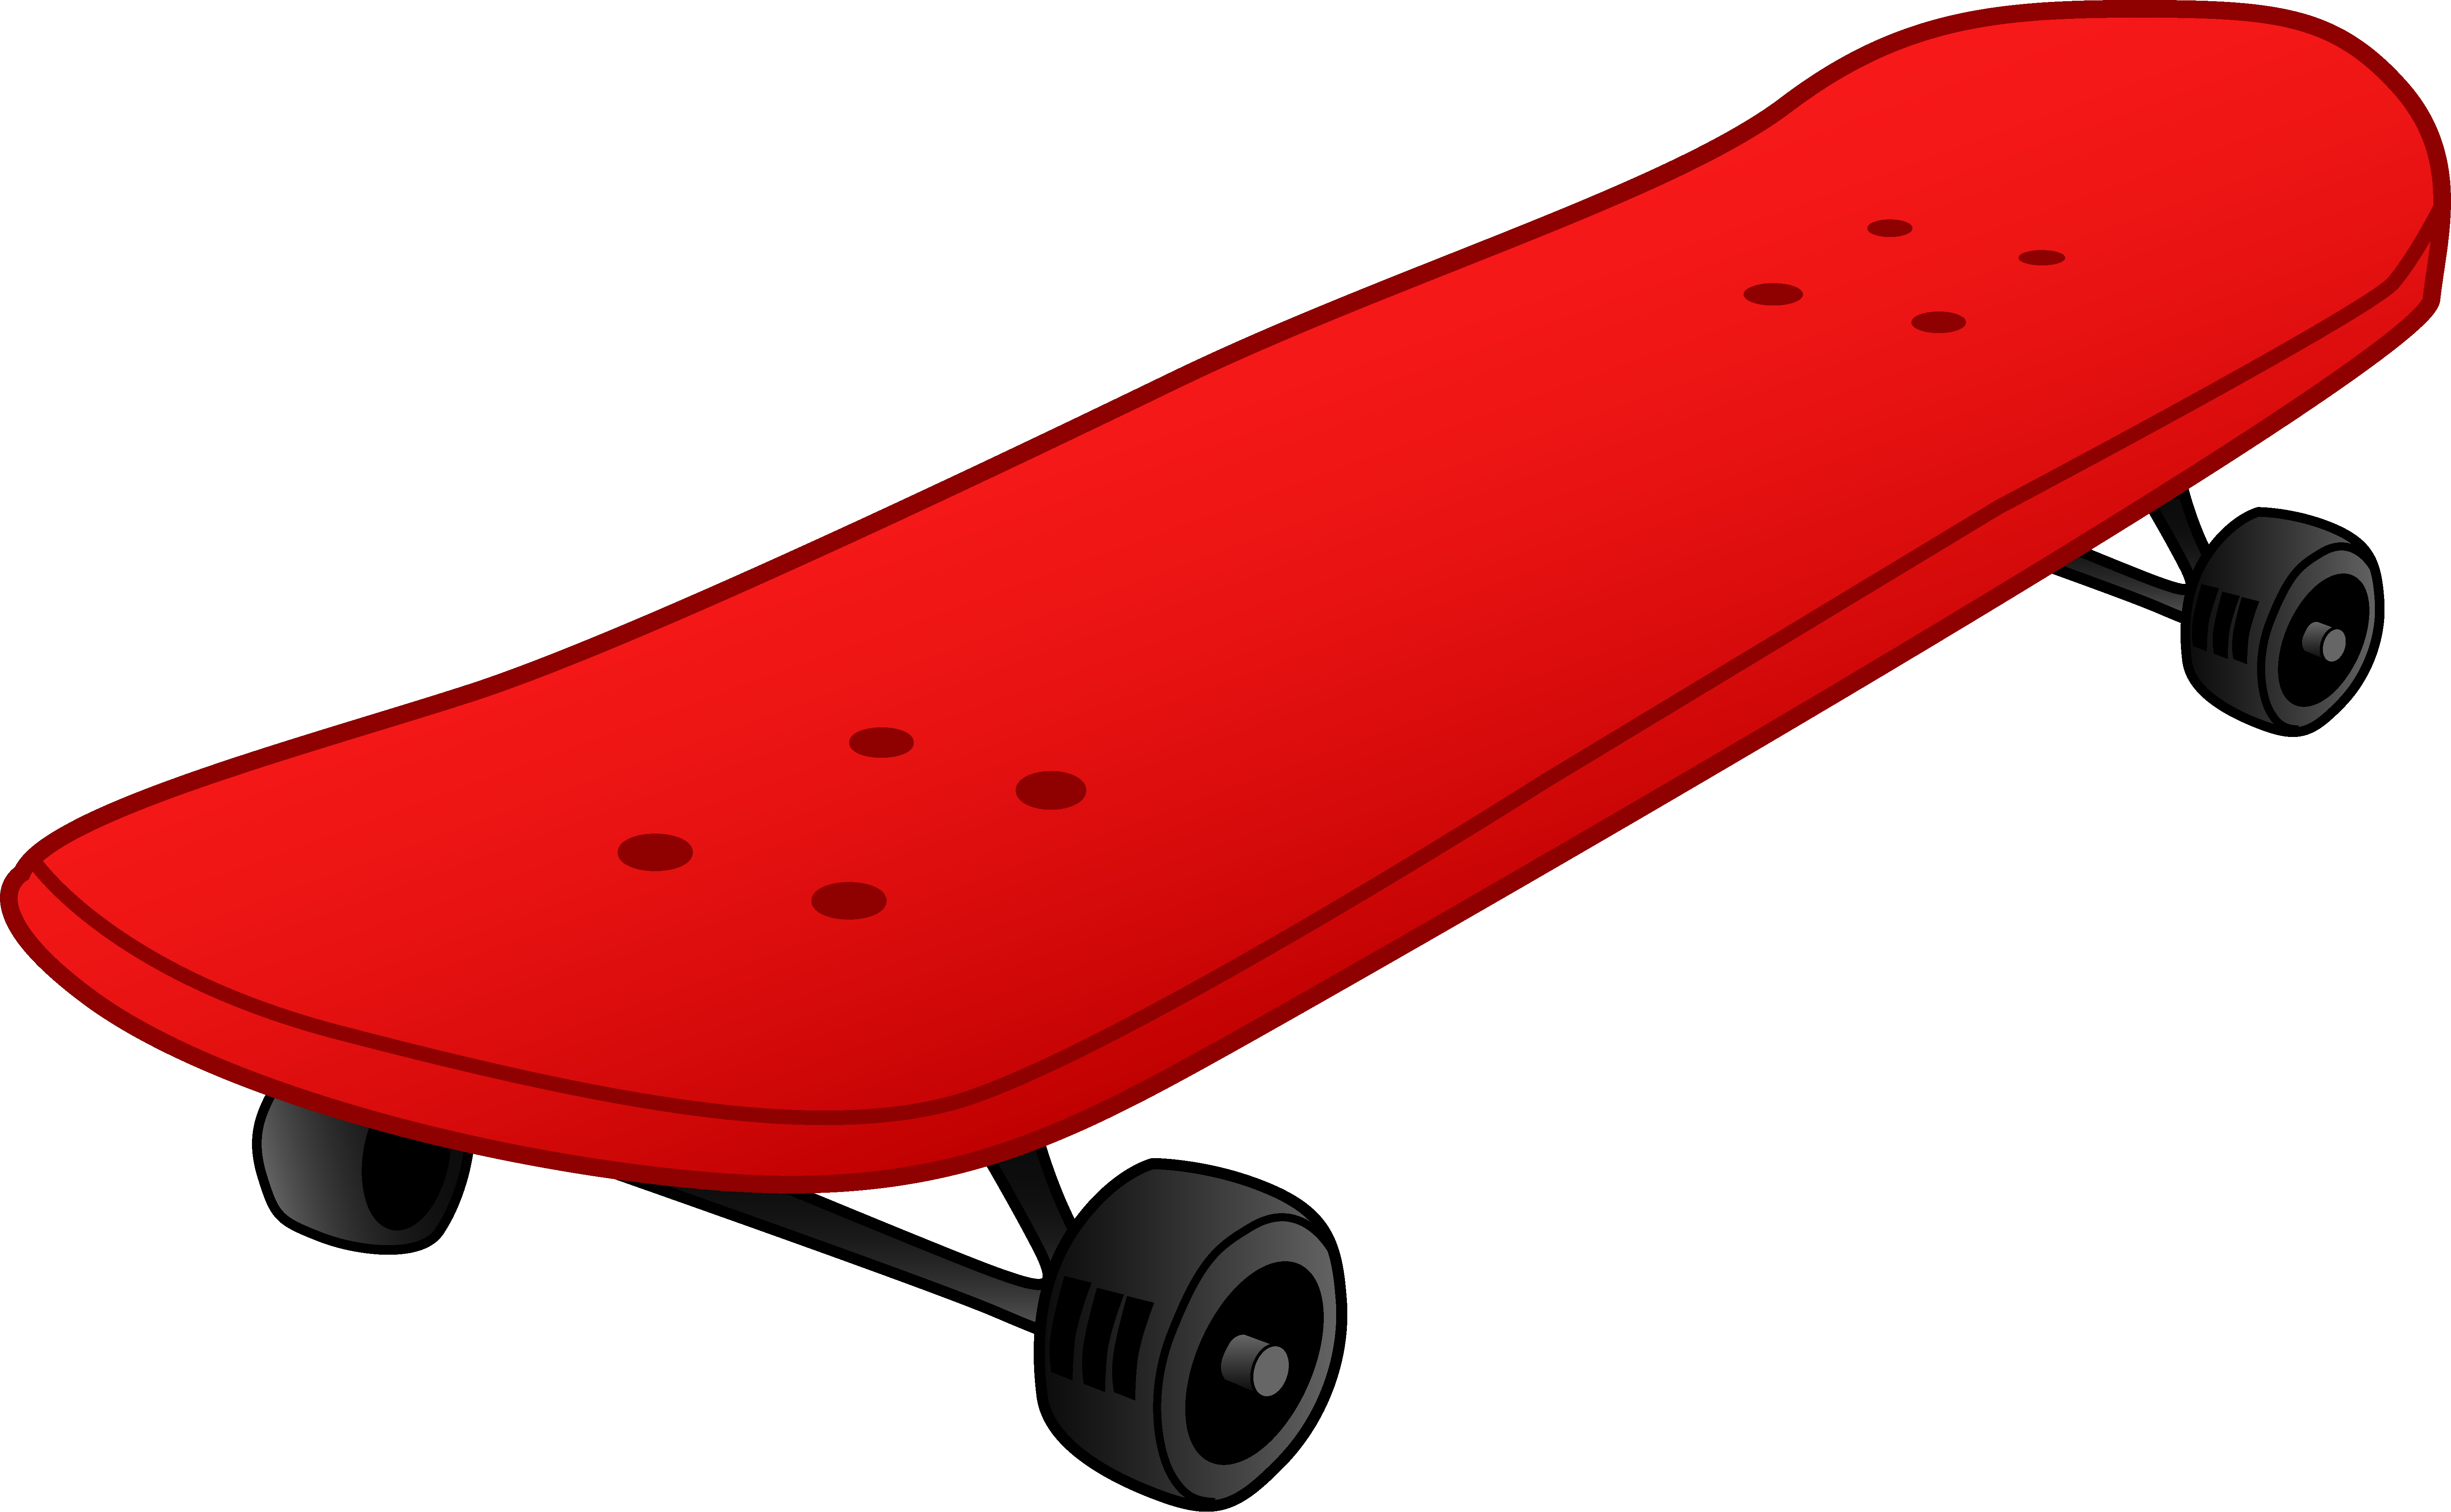 Skateboard Hd PNG Image